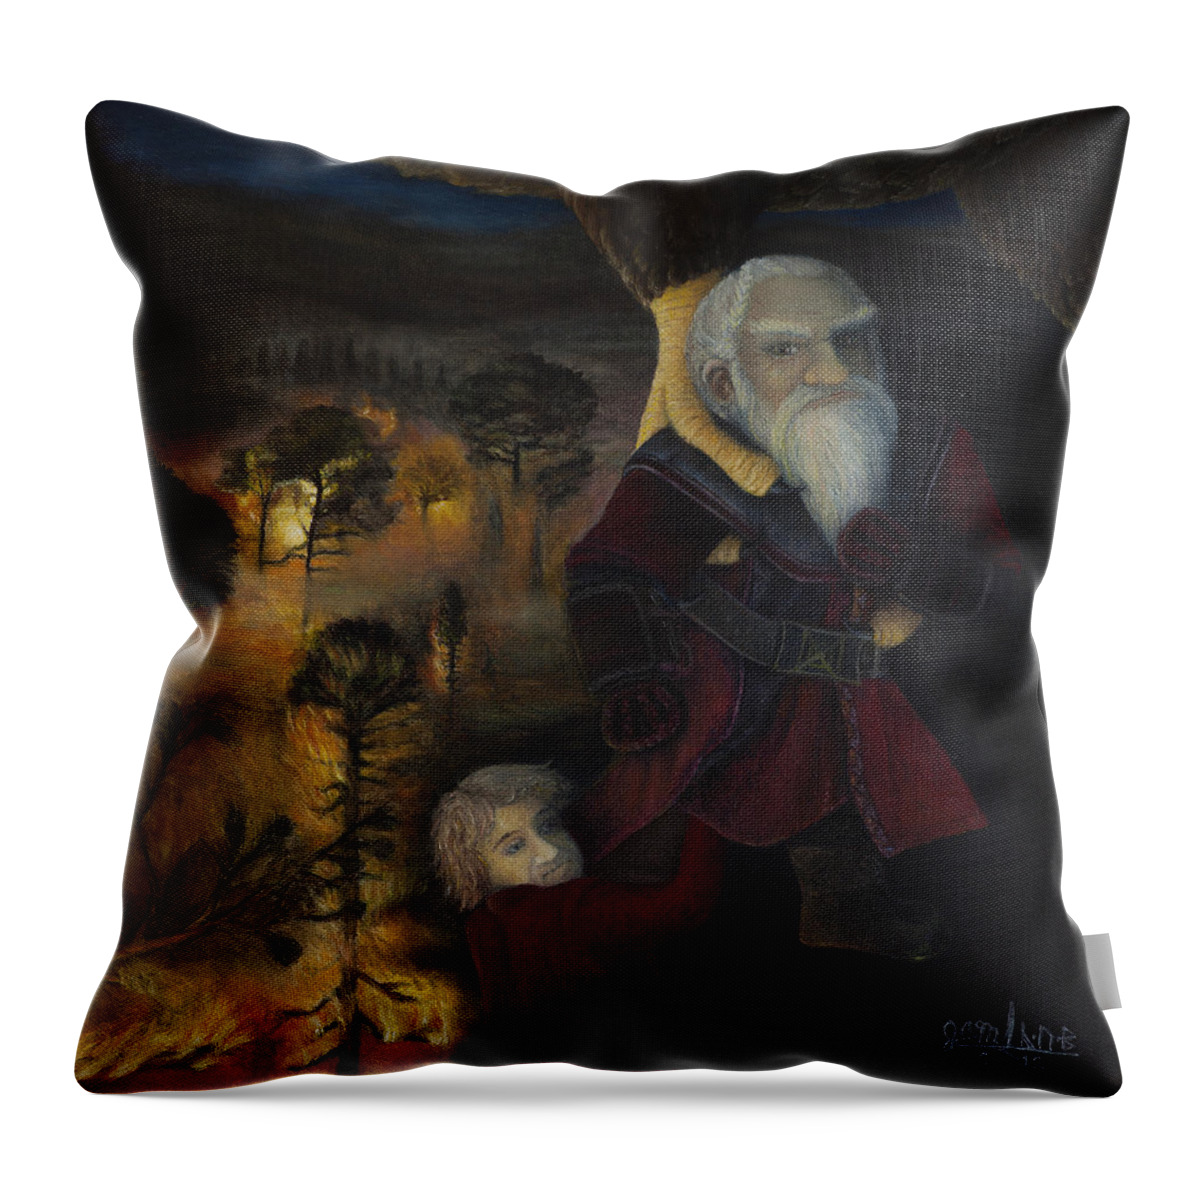 The Hobbit Throw Pillow featuring the painting Dori by Joshua Martin